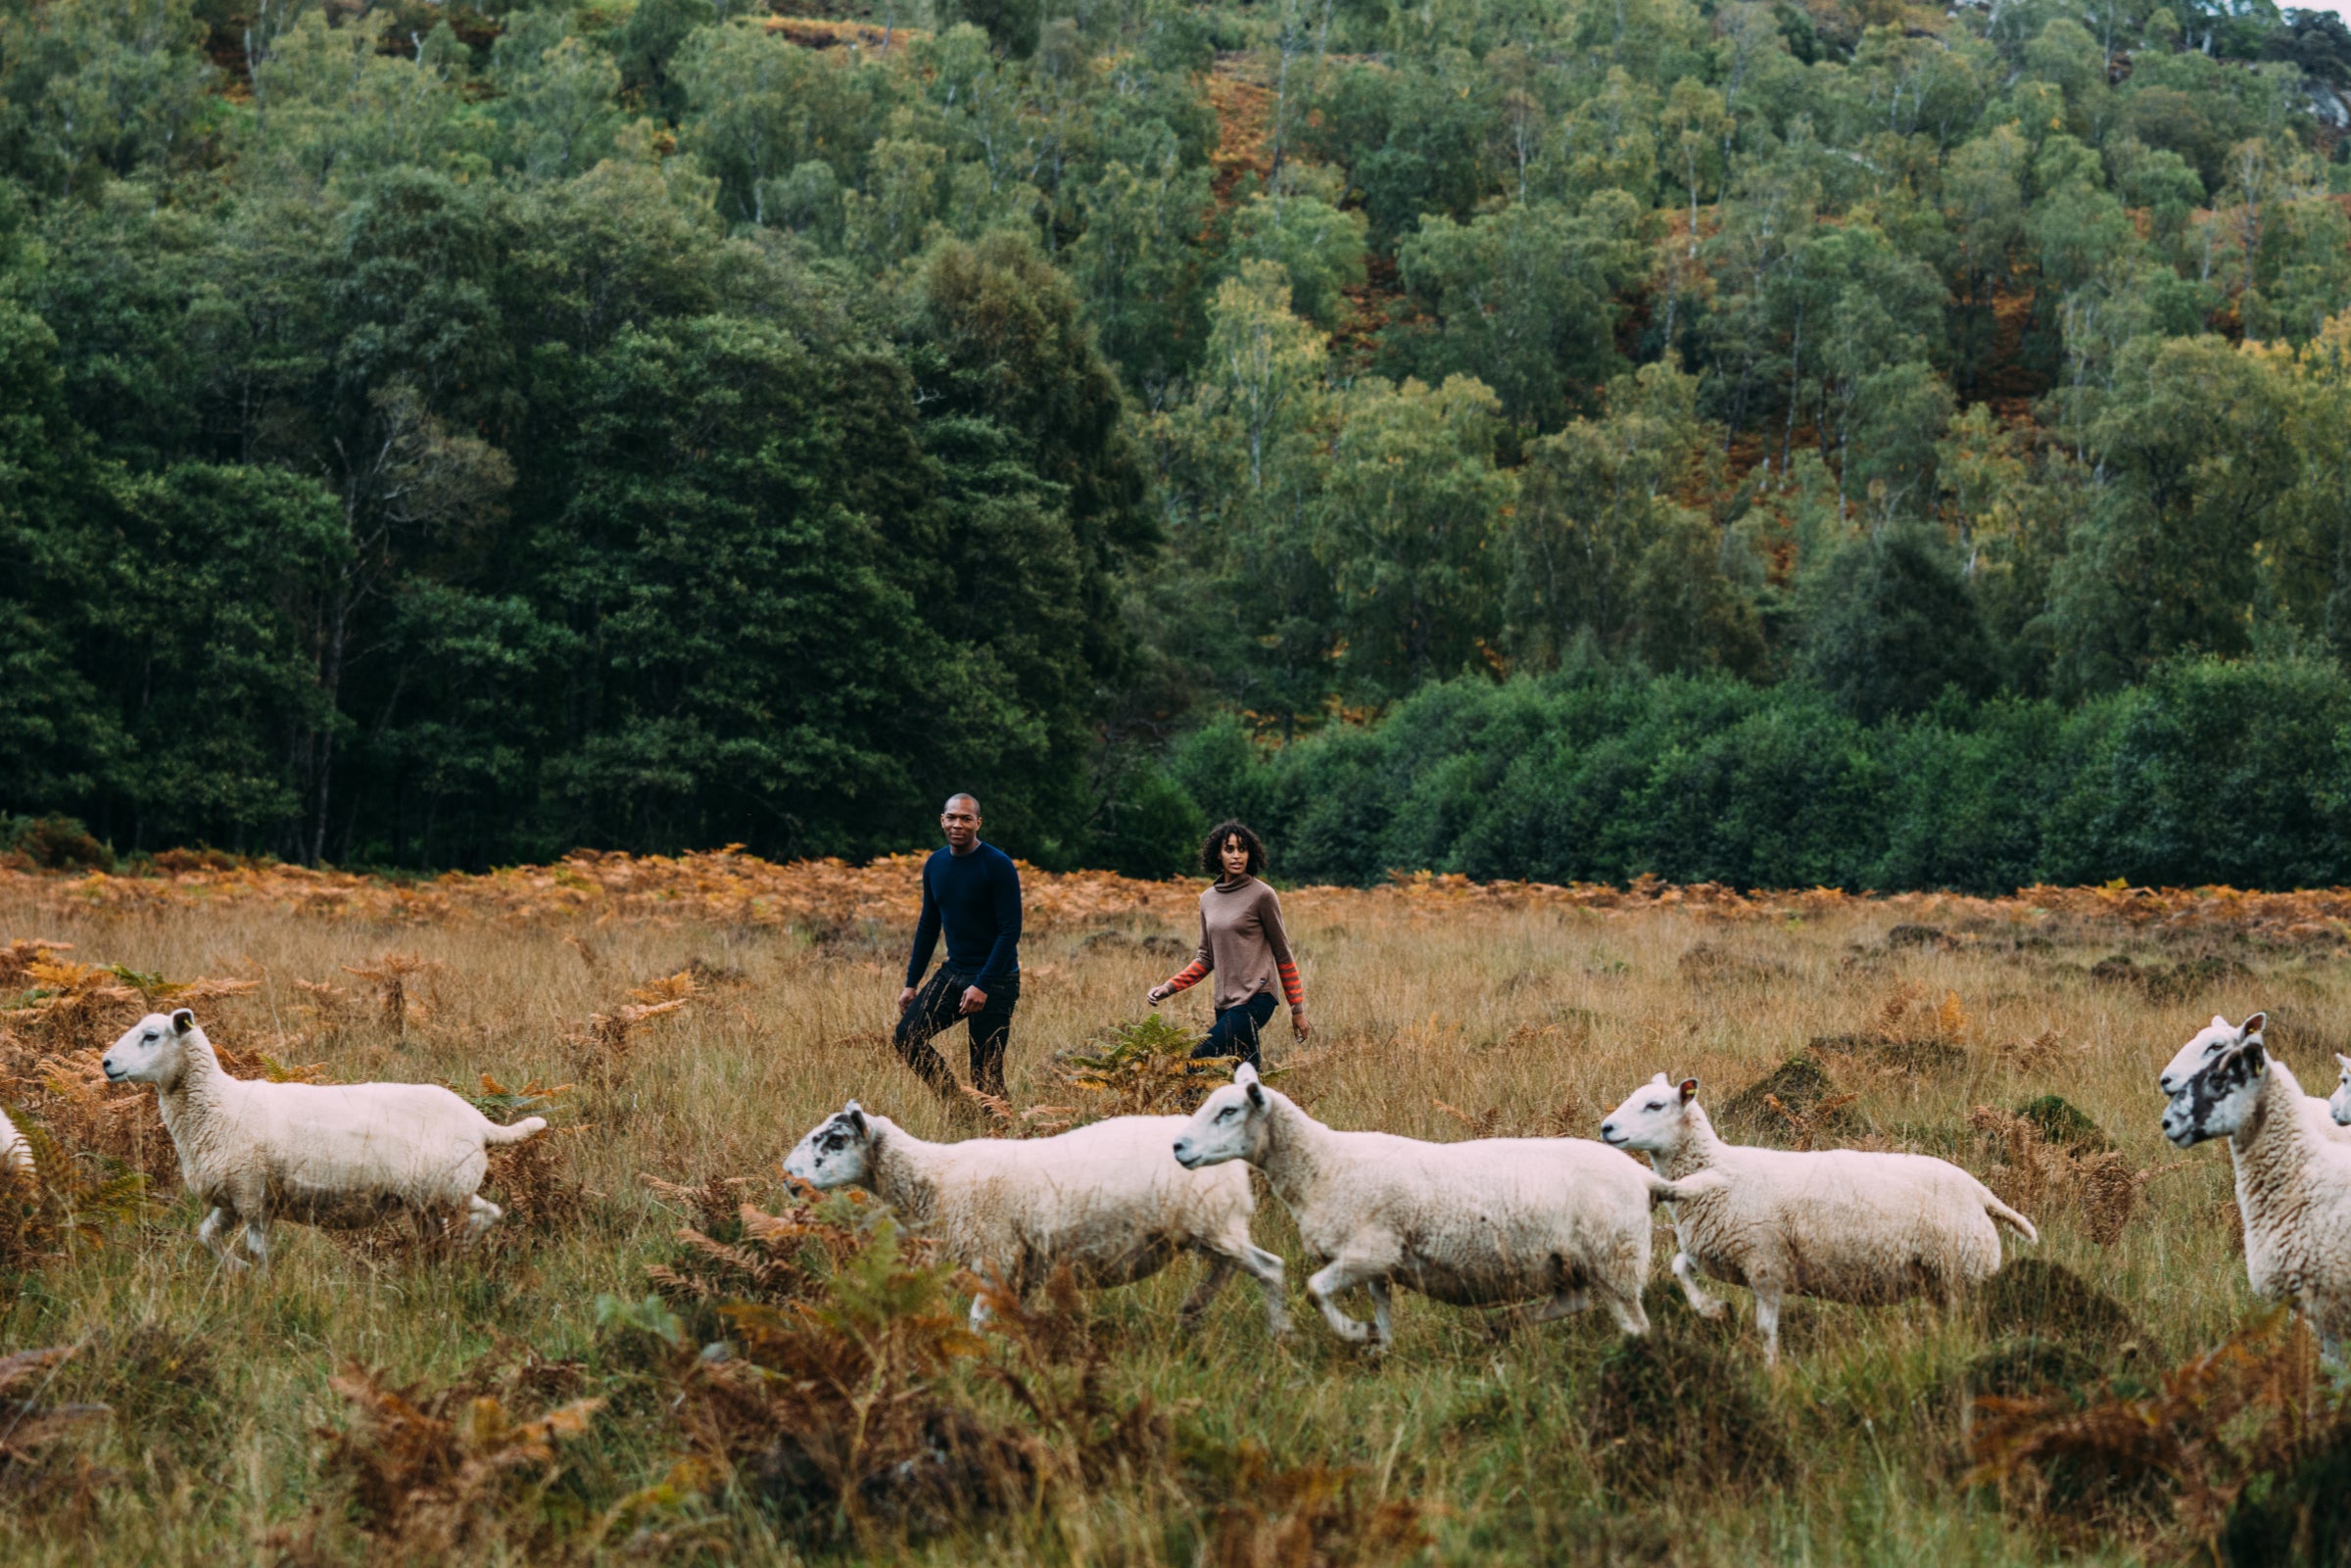 Isobaa Merino - Strolling through a field of Sheep